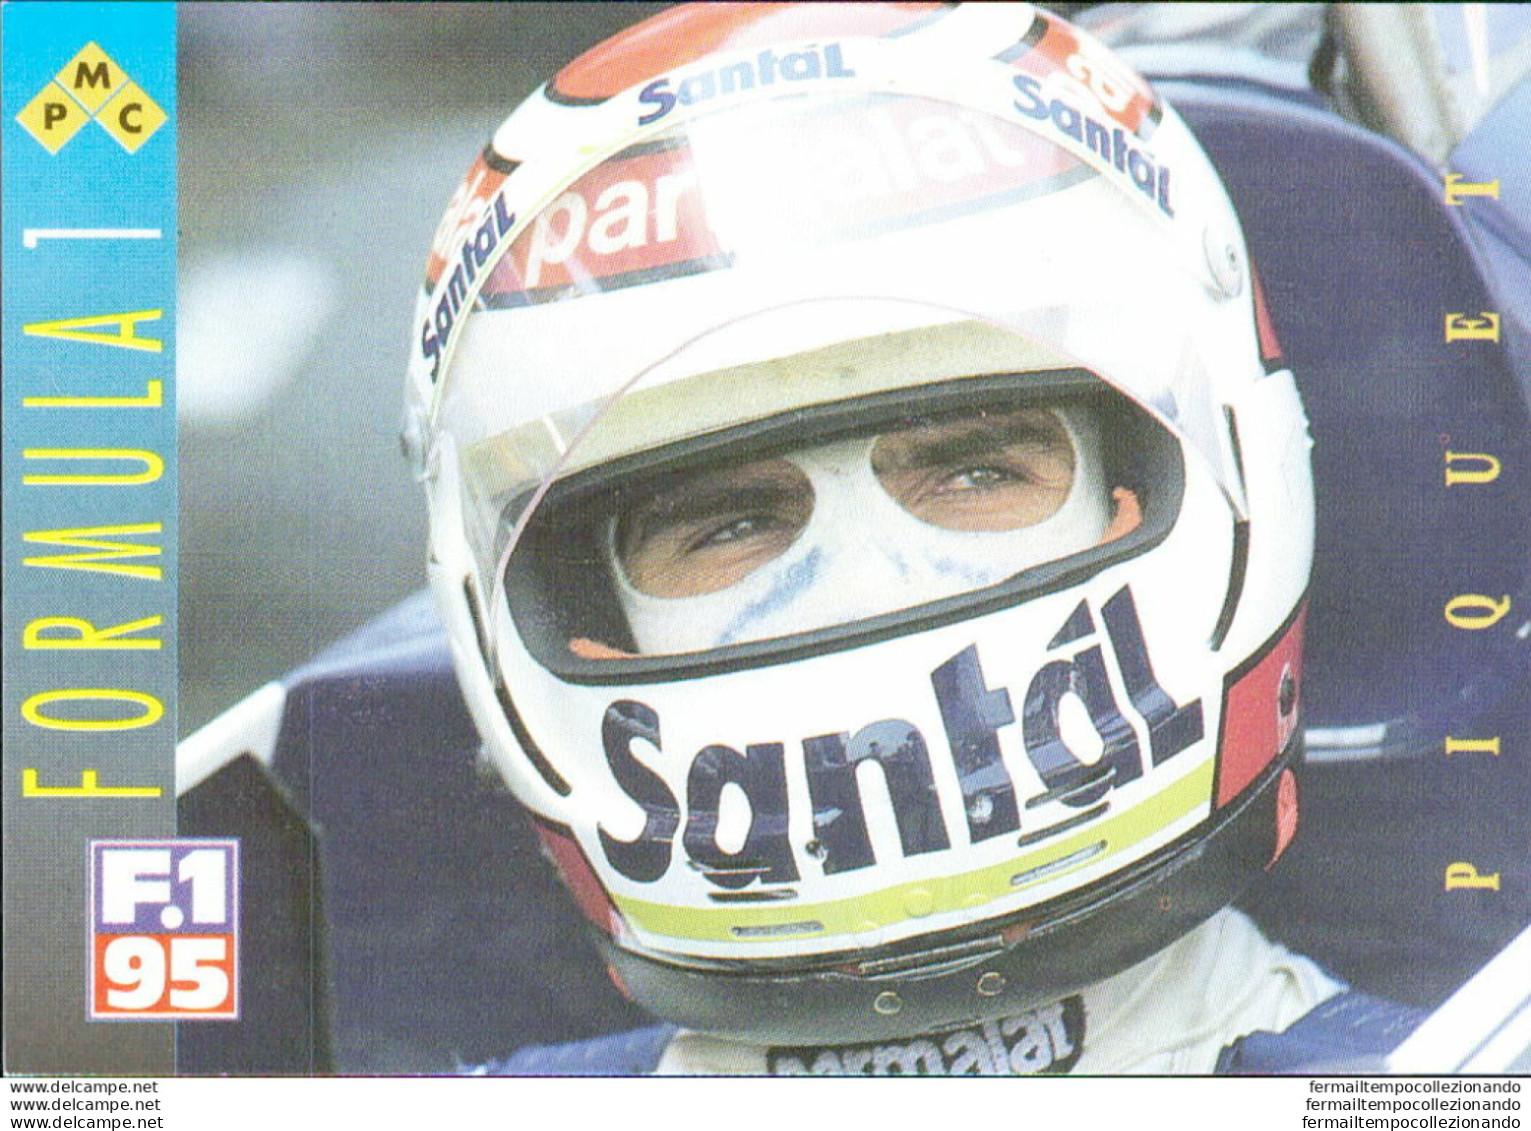 Bh32 1995 Formula 1 Gran Prix Collection Card Piquet N 32 - Catalogues